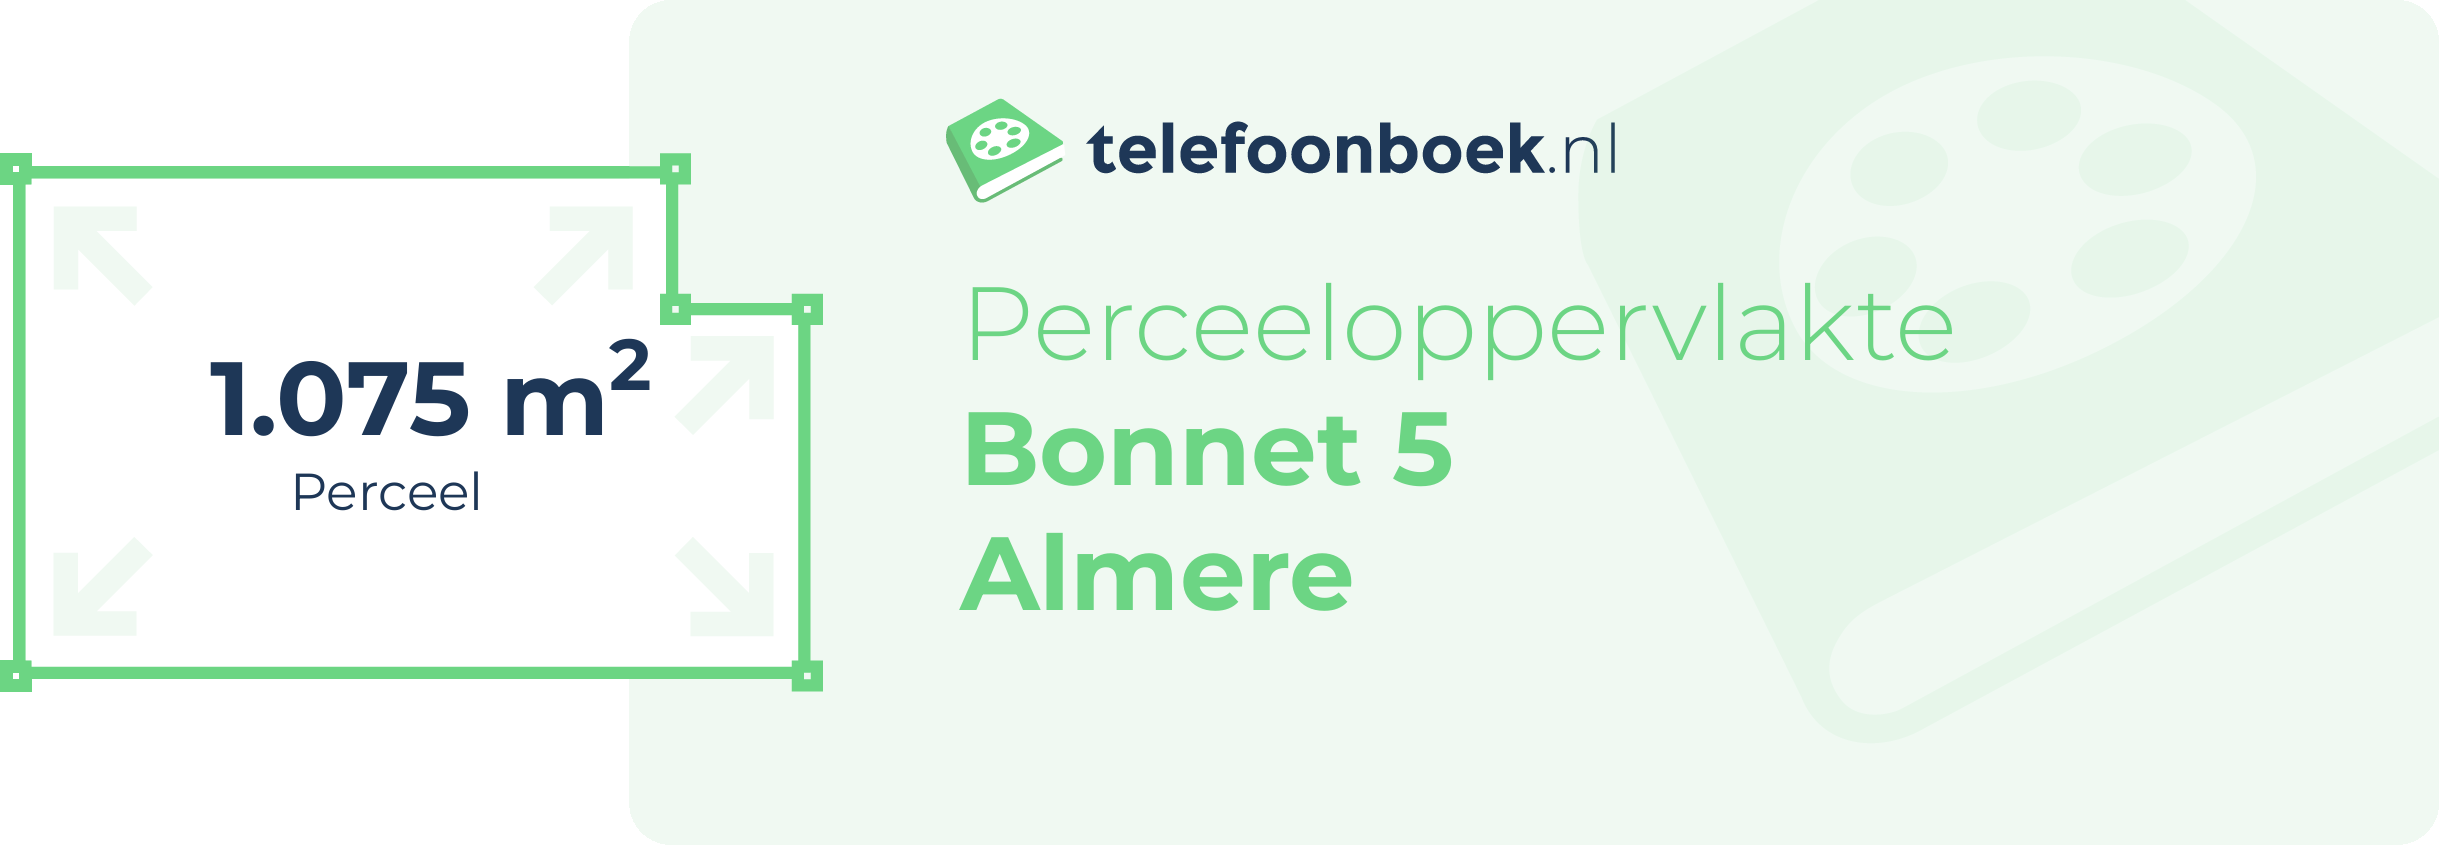 Perceeloppervlakte Bonnet 5 Almere